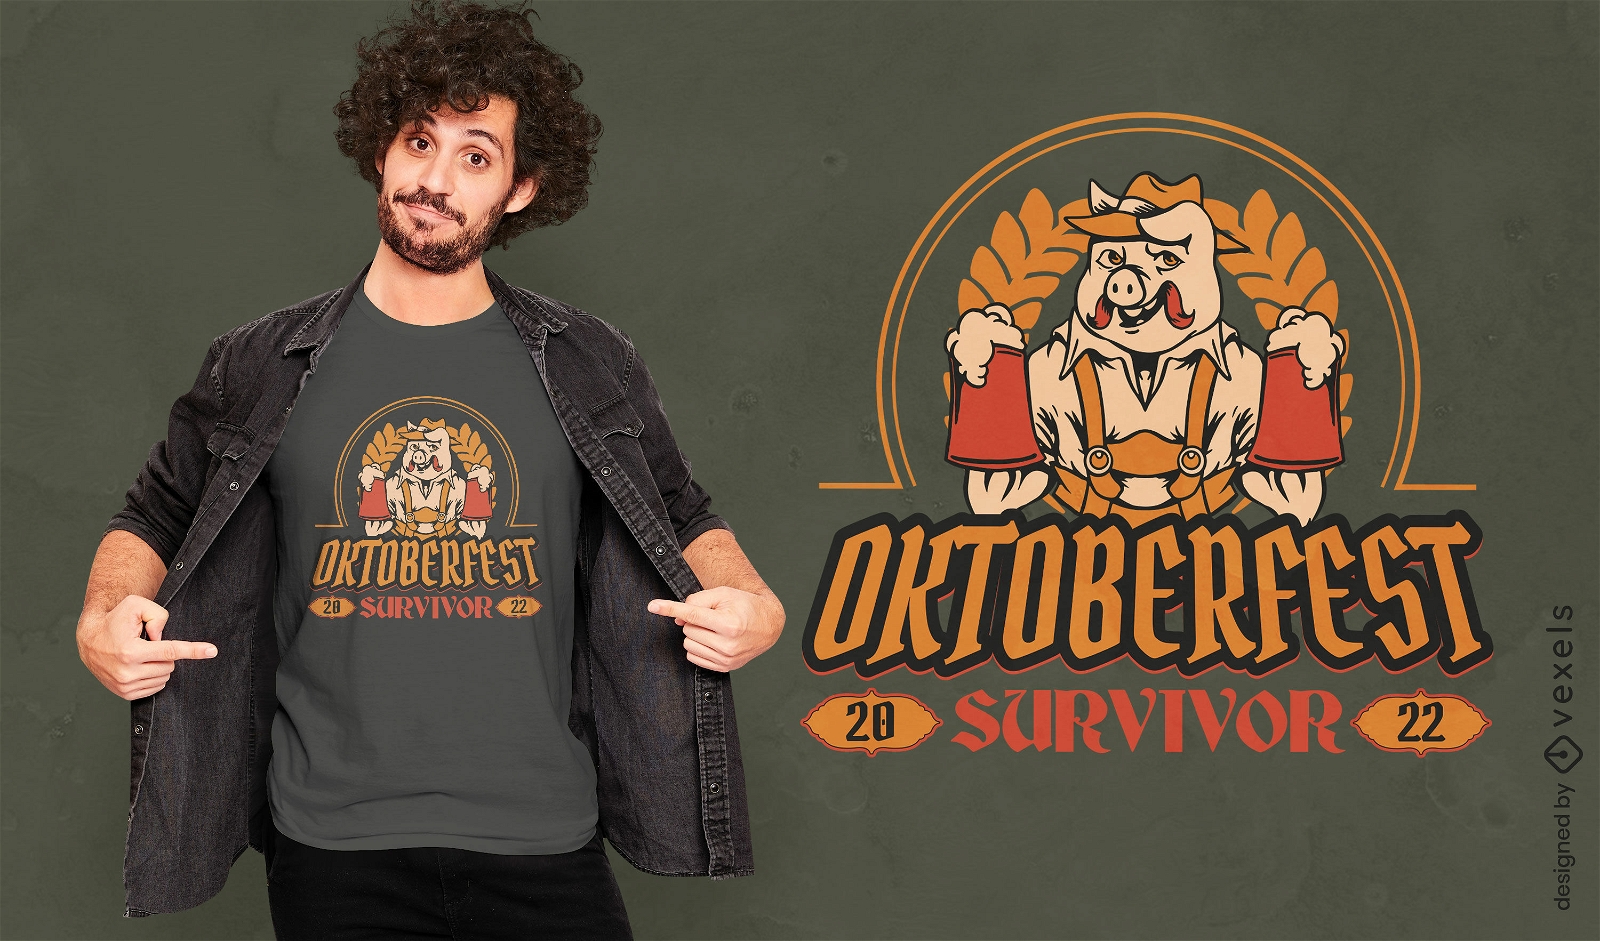 Dise?o de camiseta de sobreviviente de Oktoberfest